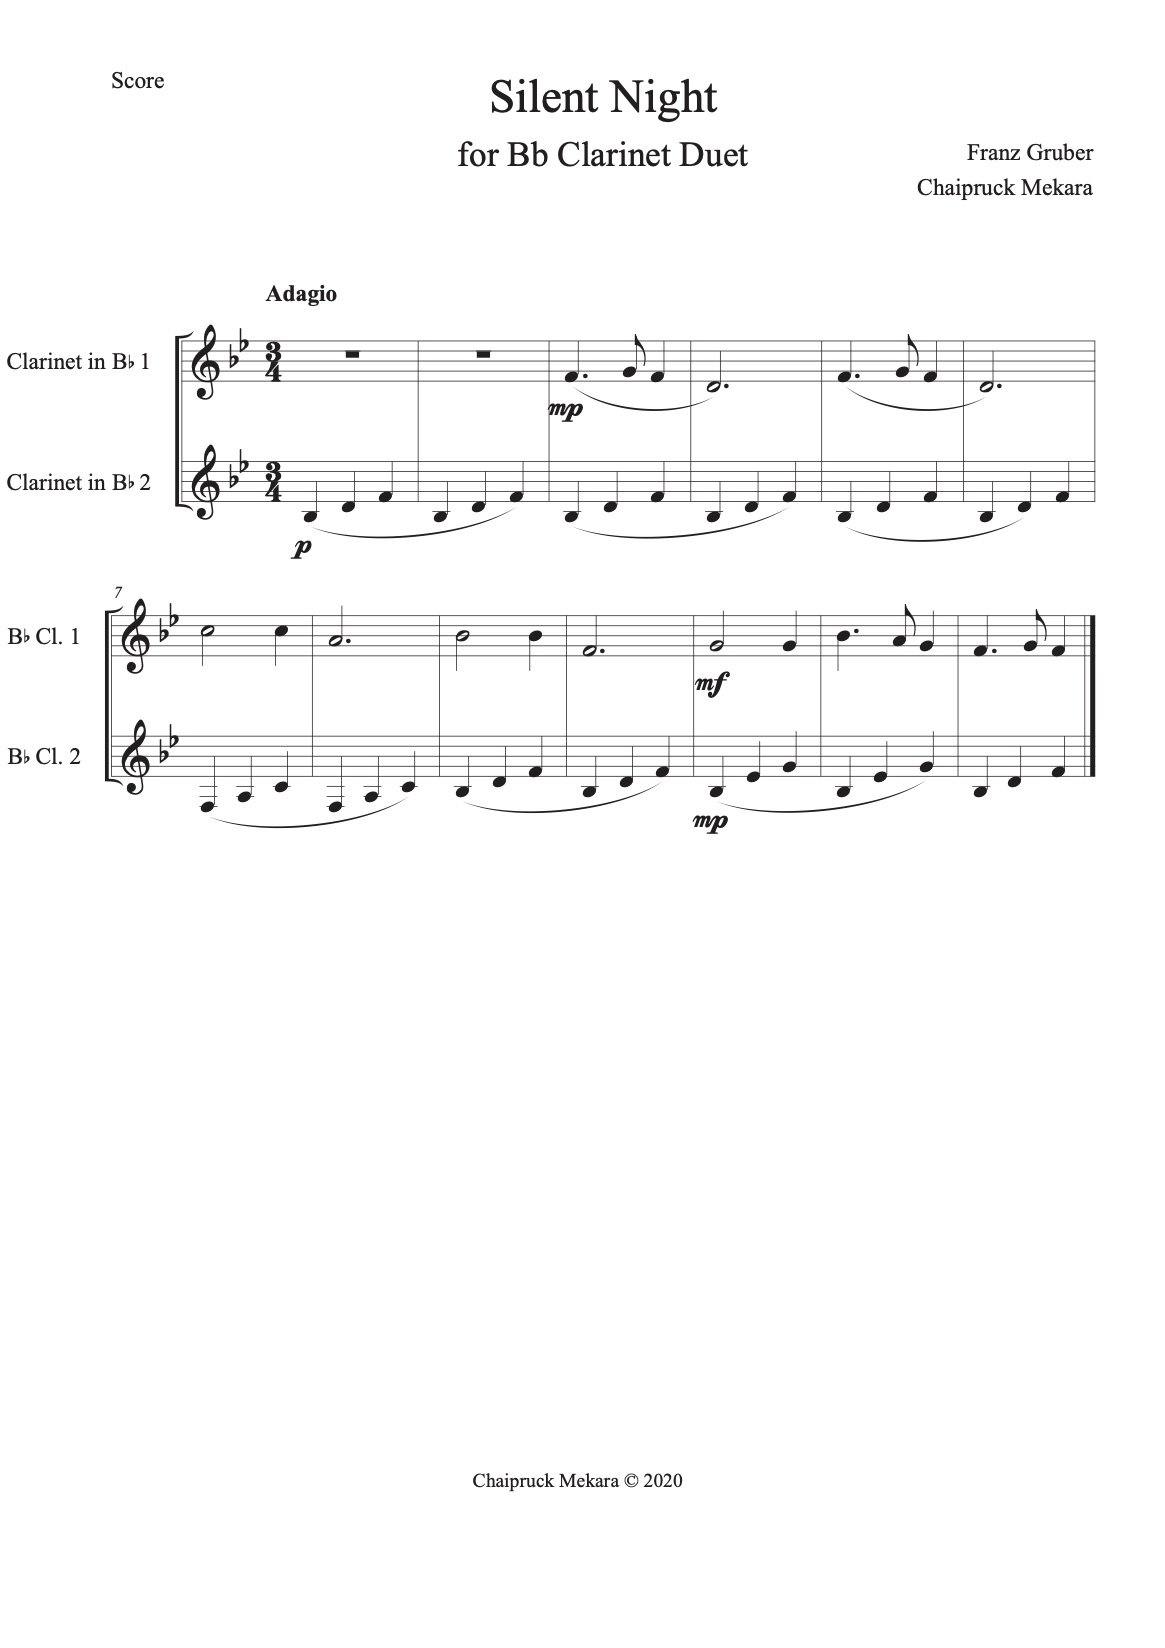 Simple- Silent Night for Bb Clarinet Duet - ChaipruckMekara